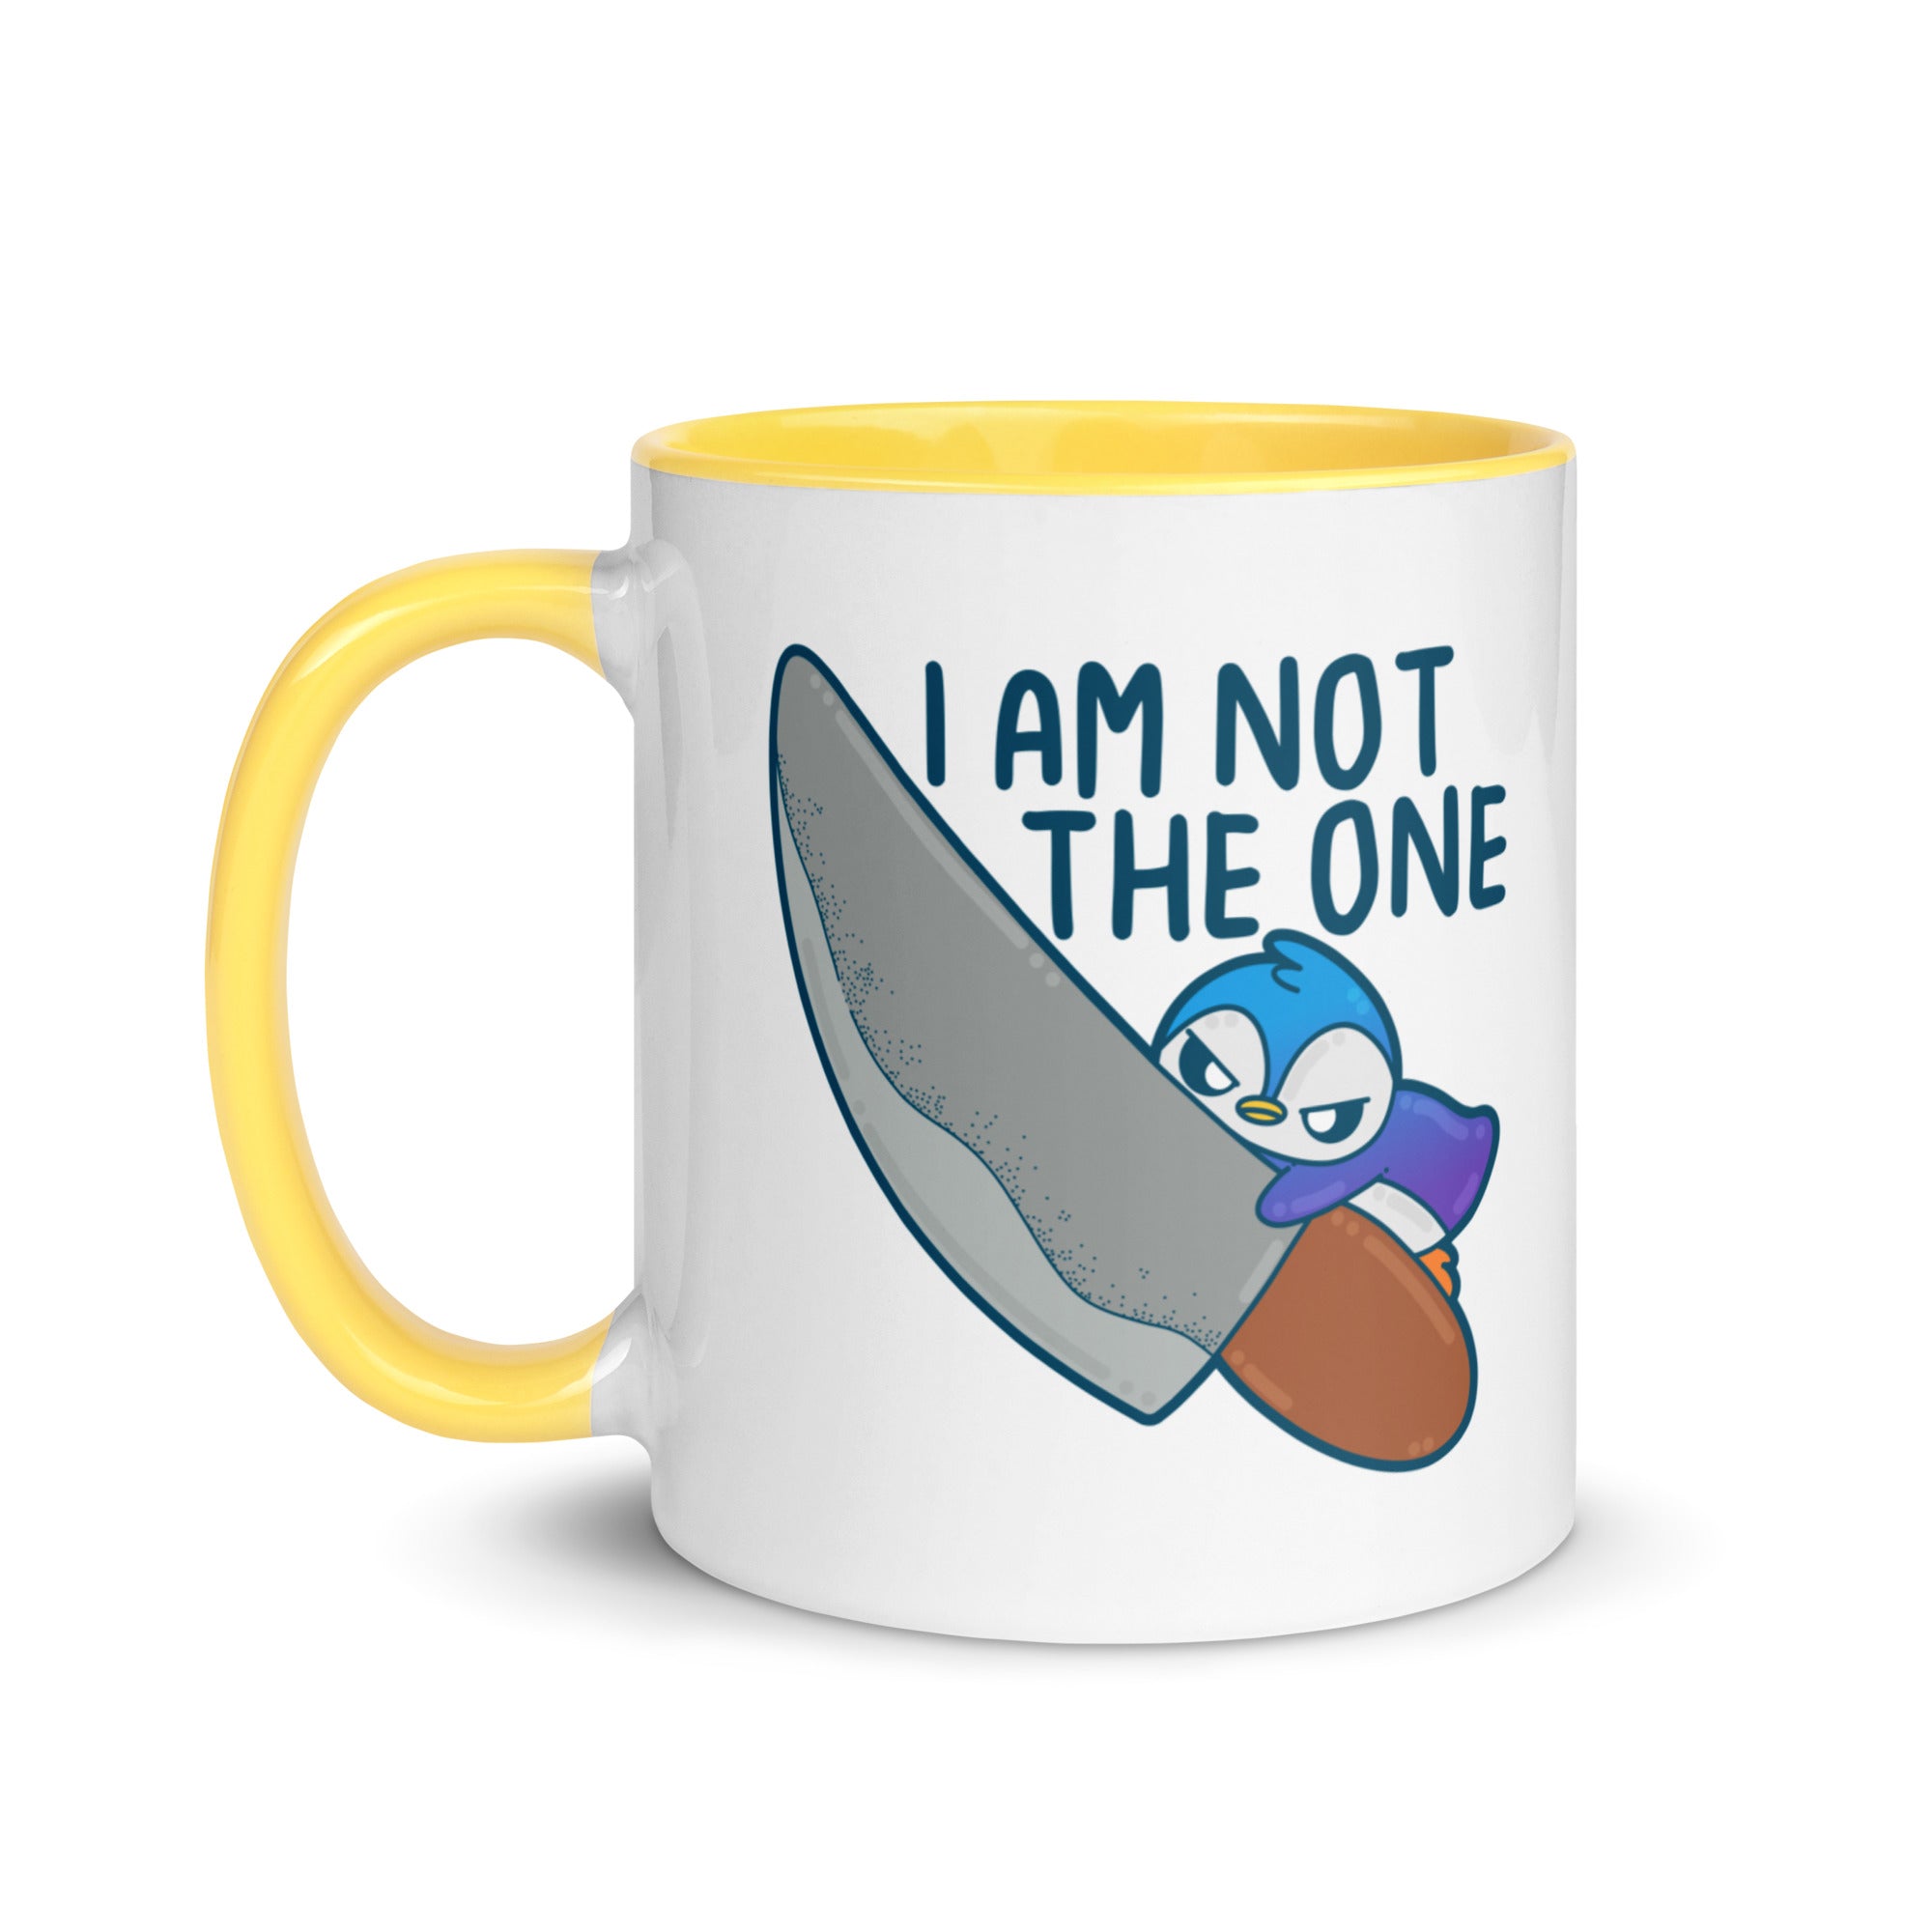 I AM NOT THE ONE - Mug With Color Inside - ChubbleGumLLC